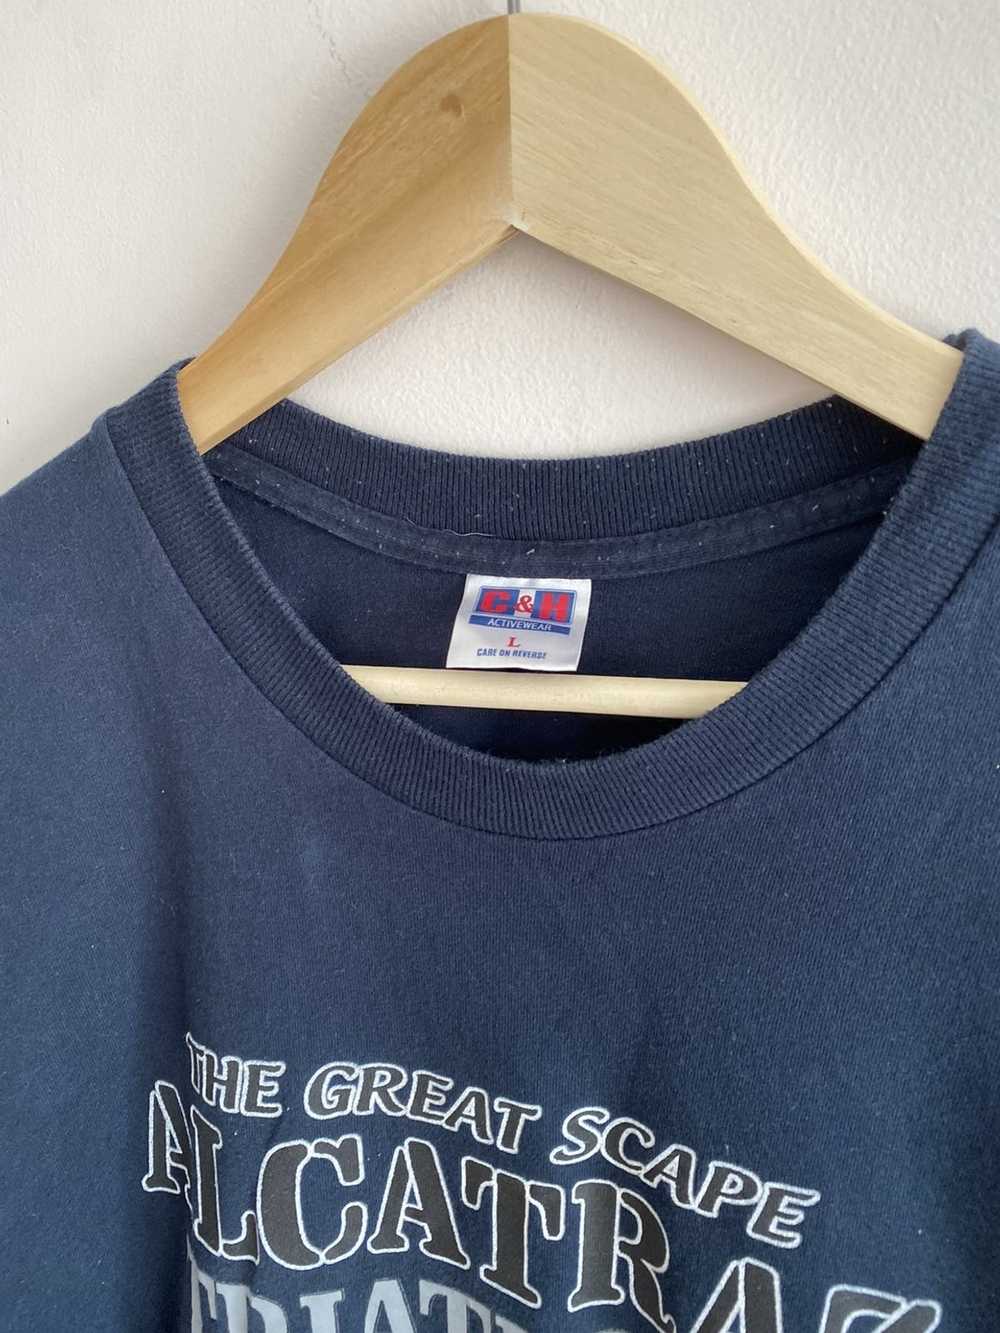 Vintage Vintage Alcatraz Triathlon t shirt - image 2